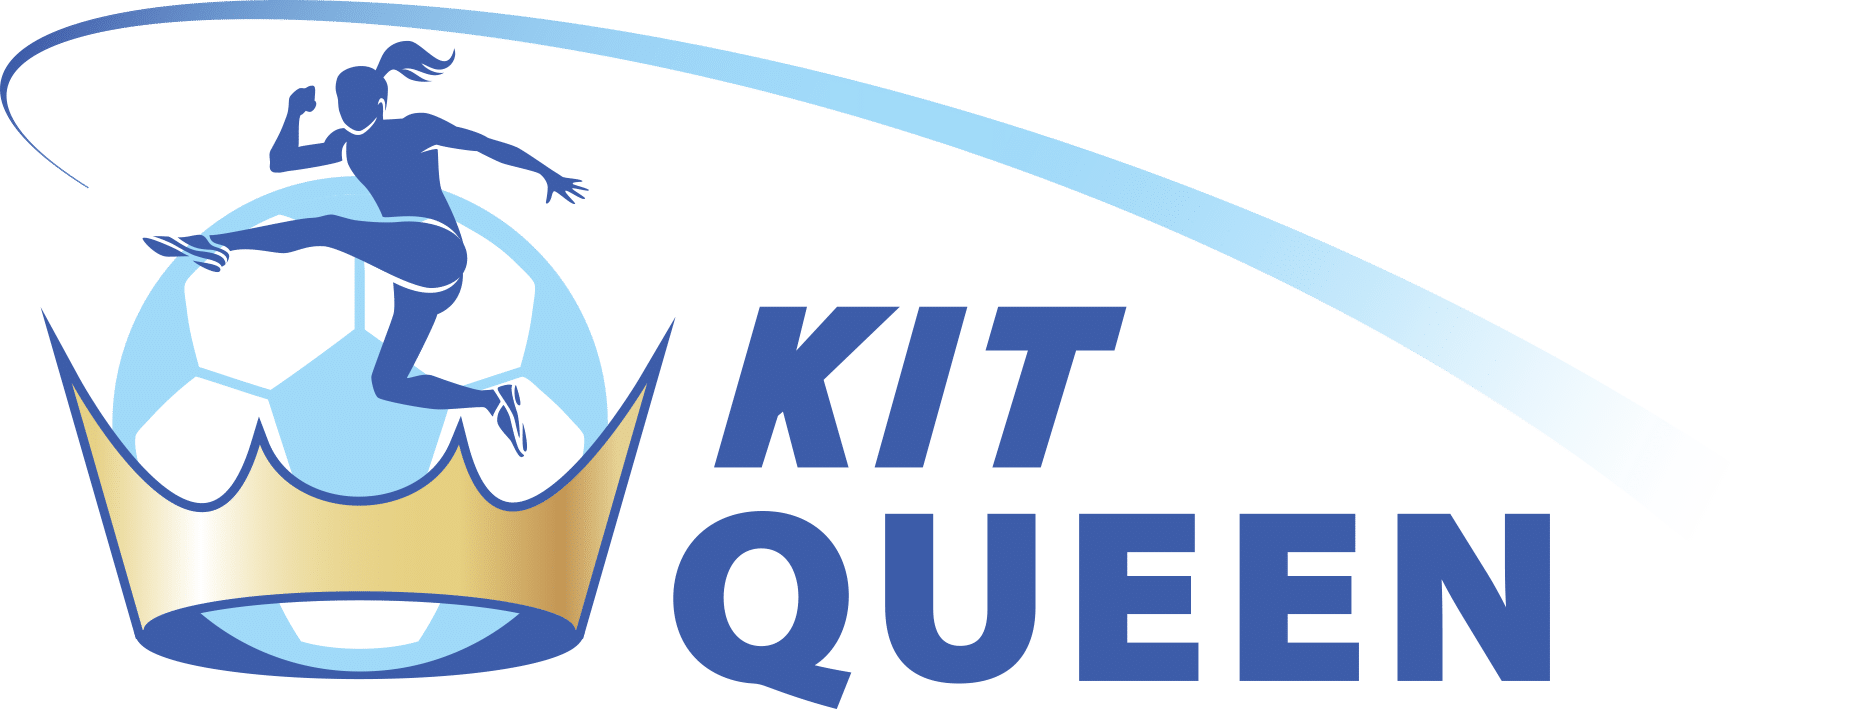 kit queen logo